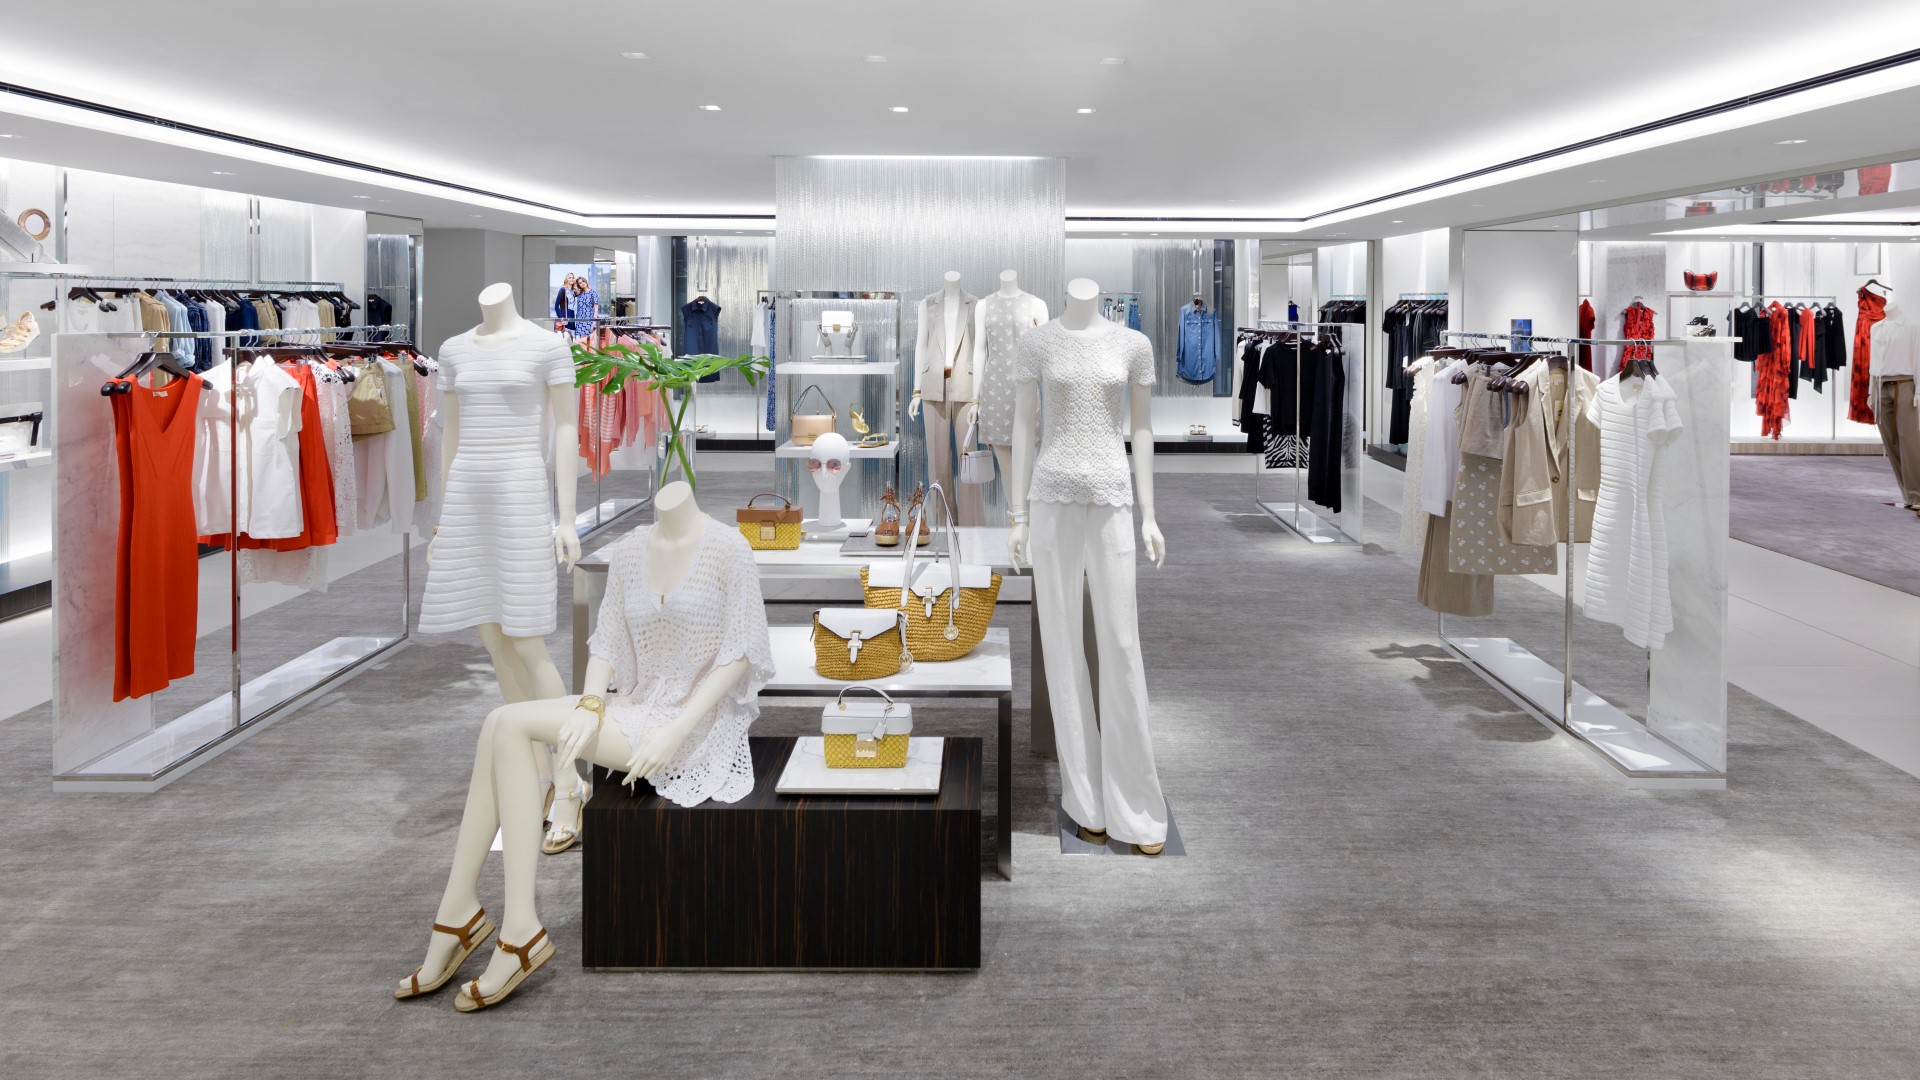 Michael Kors Londra: il nuovo flagship store apre in Regent Street, le foto